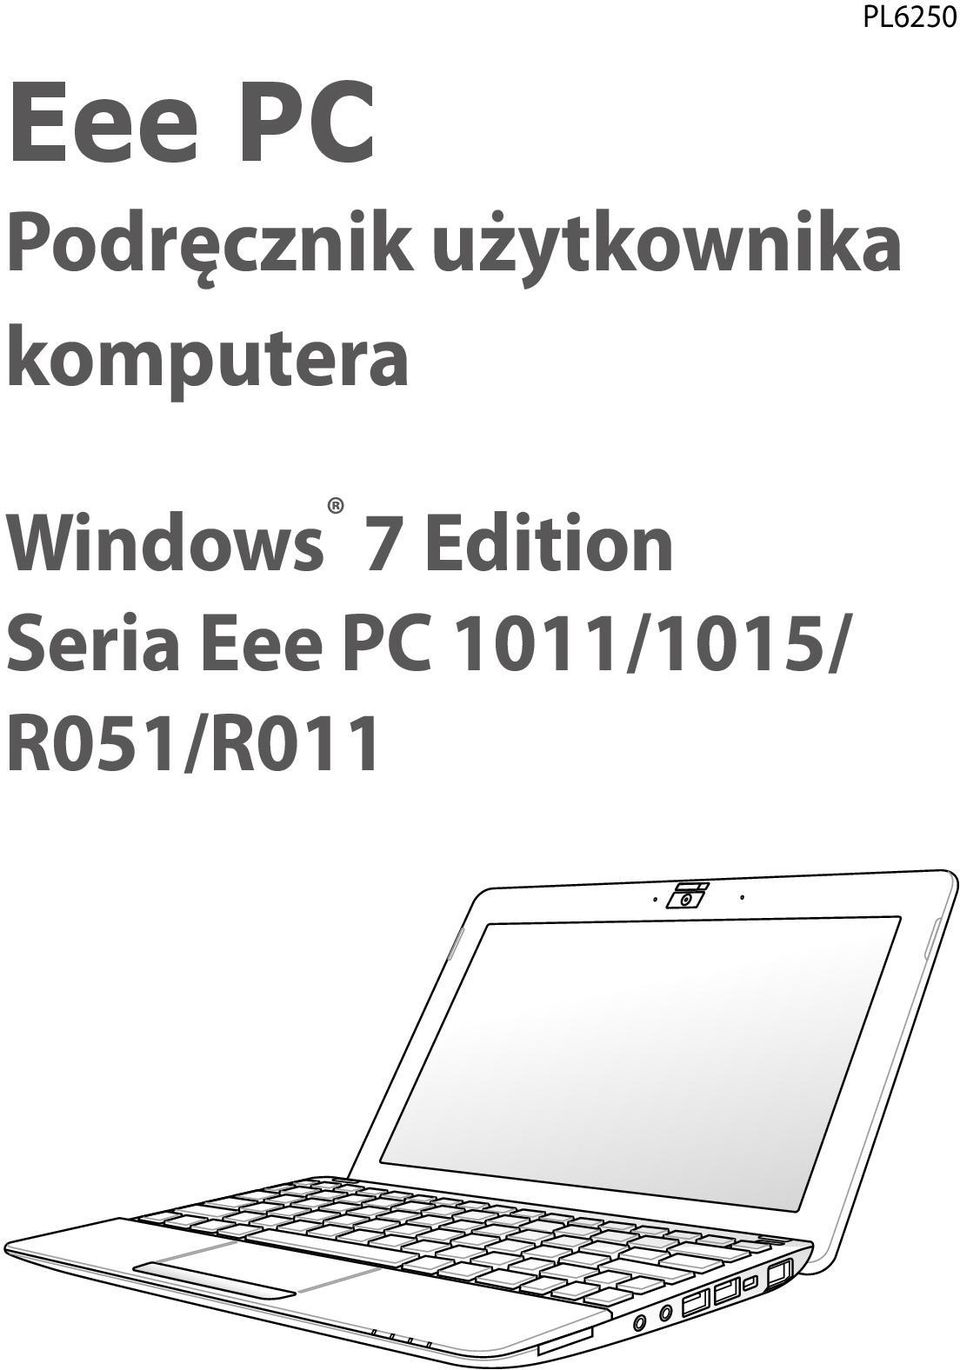 Windows 7 Edition Seria